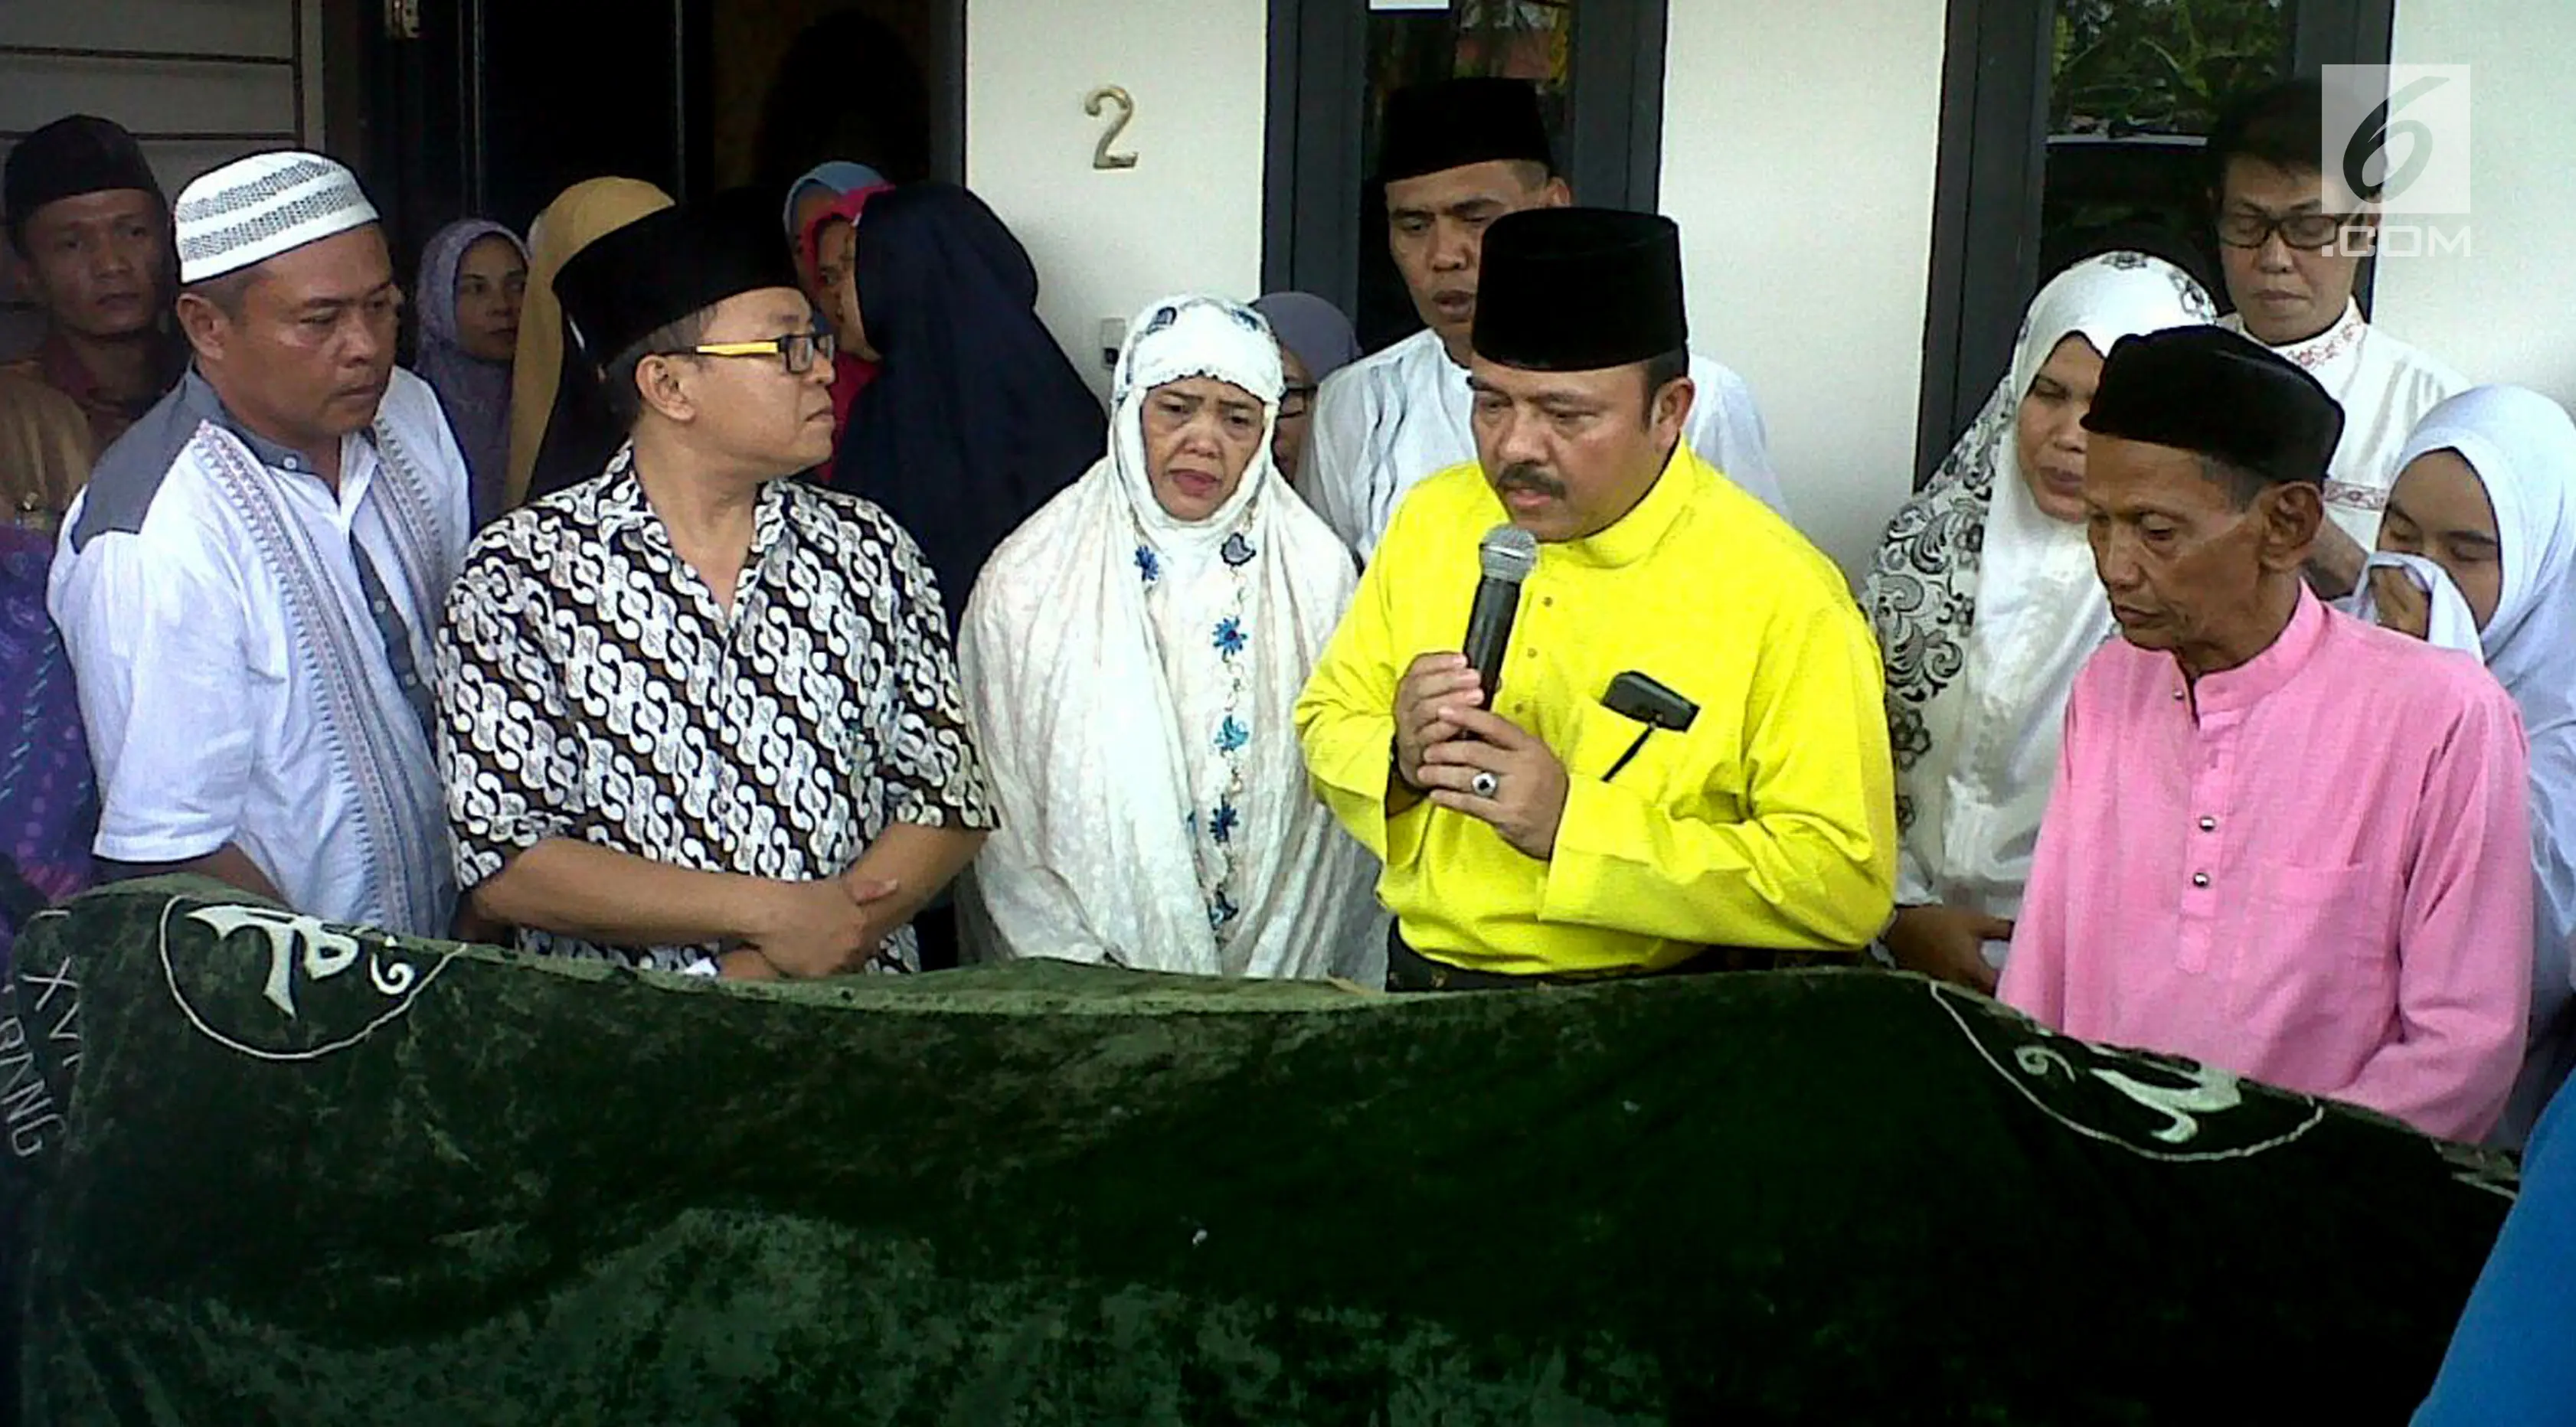 Keluarga dan kerabat dekat ketika mendoakan almarhum dr Ryan Thamrin eks presenter Dr Oz Indonesia di rumah, Pekanbaru, Jumat (08/04). dr Ryan meninggal di rumah kakaknya, Ferdi Thamrin, pada Jumat, pukul 03.30 WIB. (Liputan6.com/ M. Syukur)